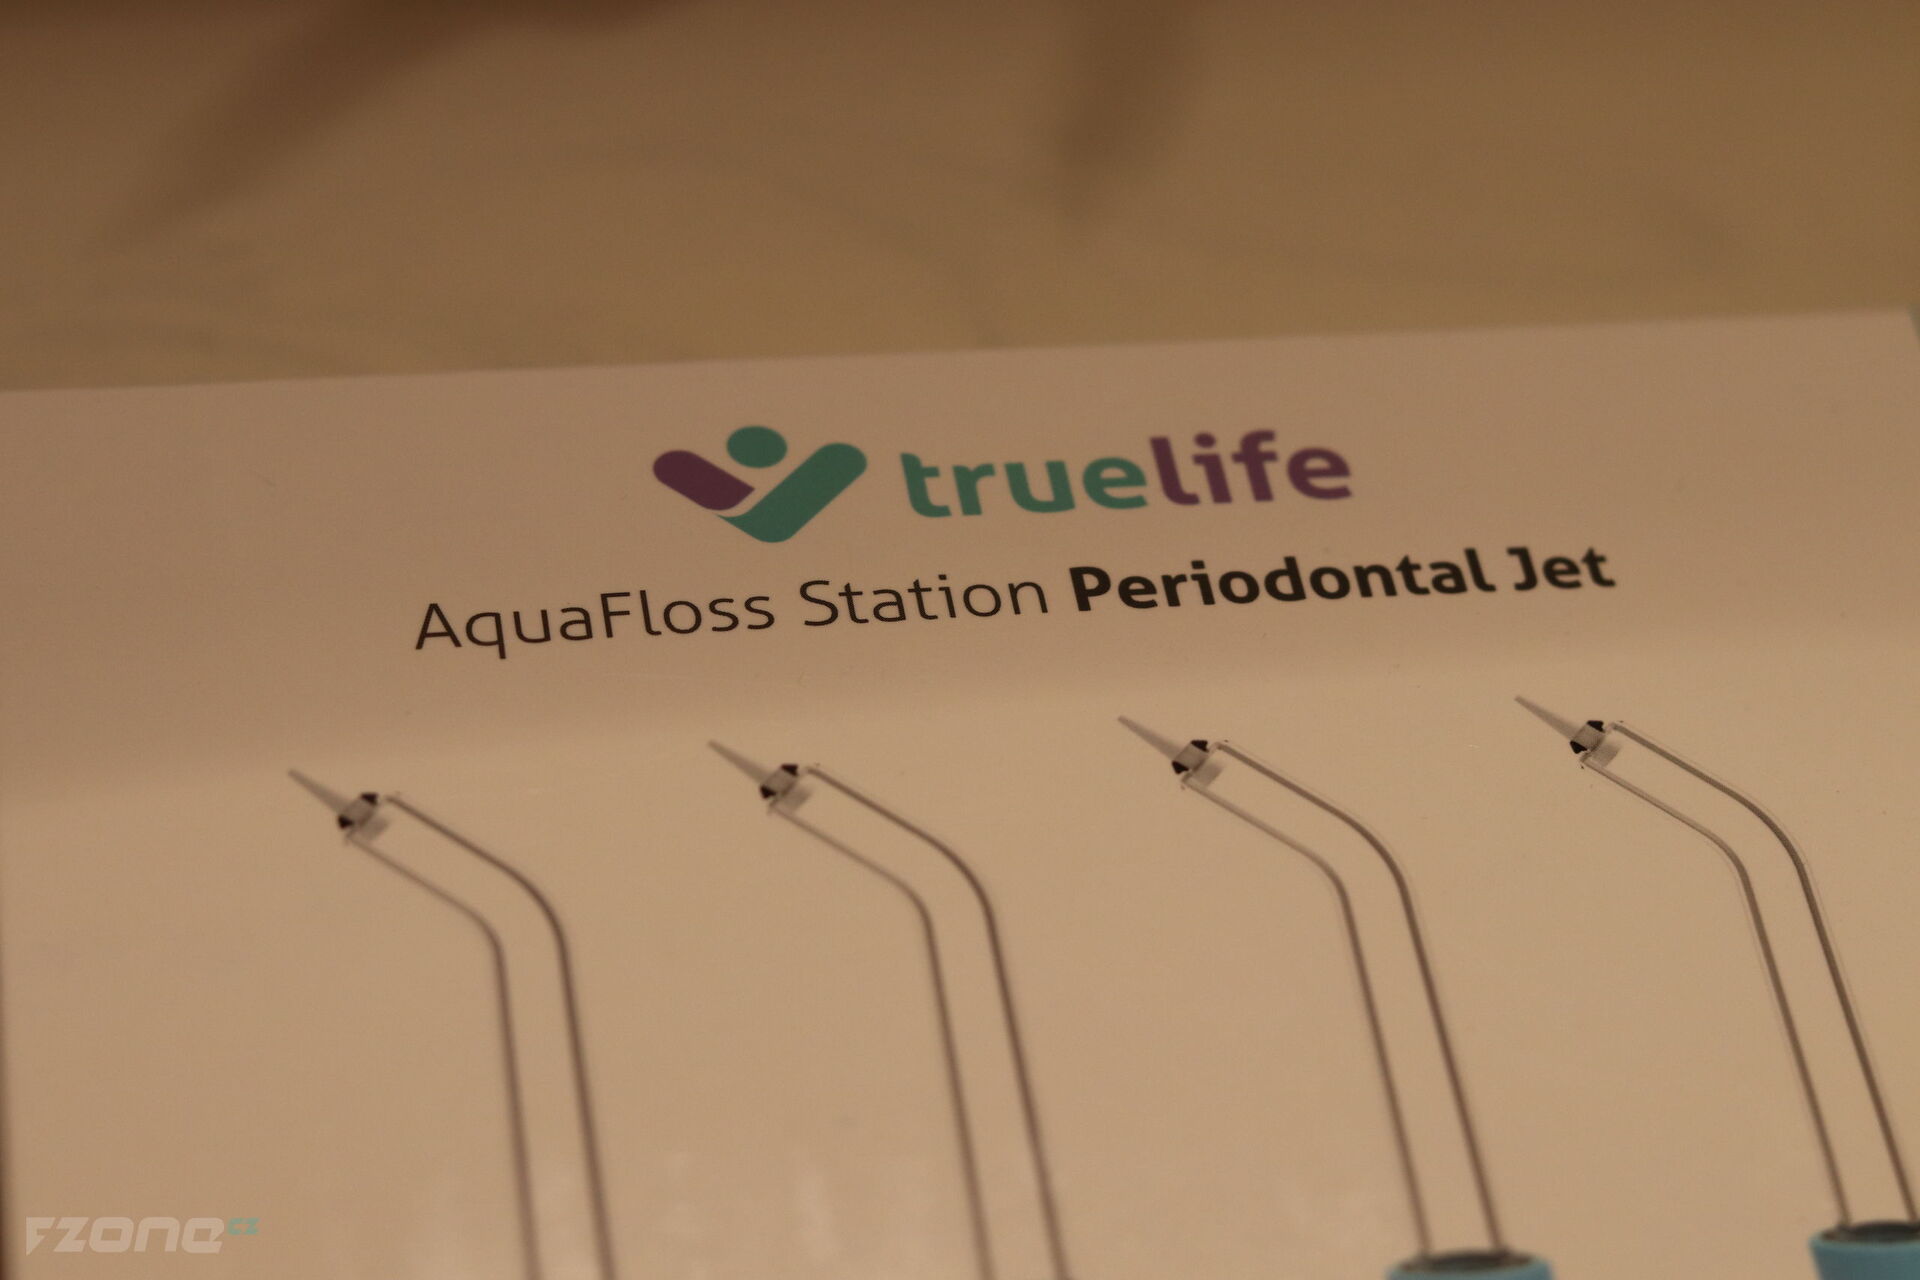 TrueLife AquaFloss Station